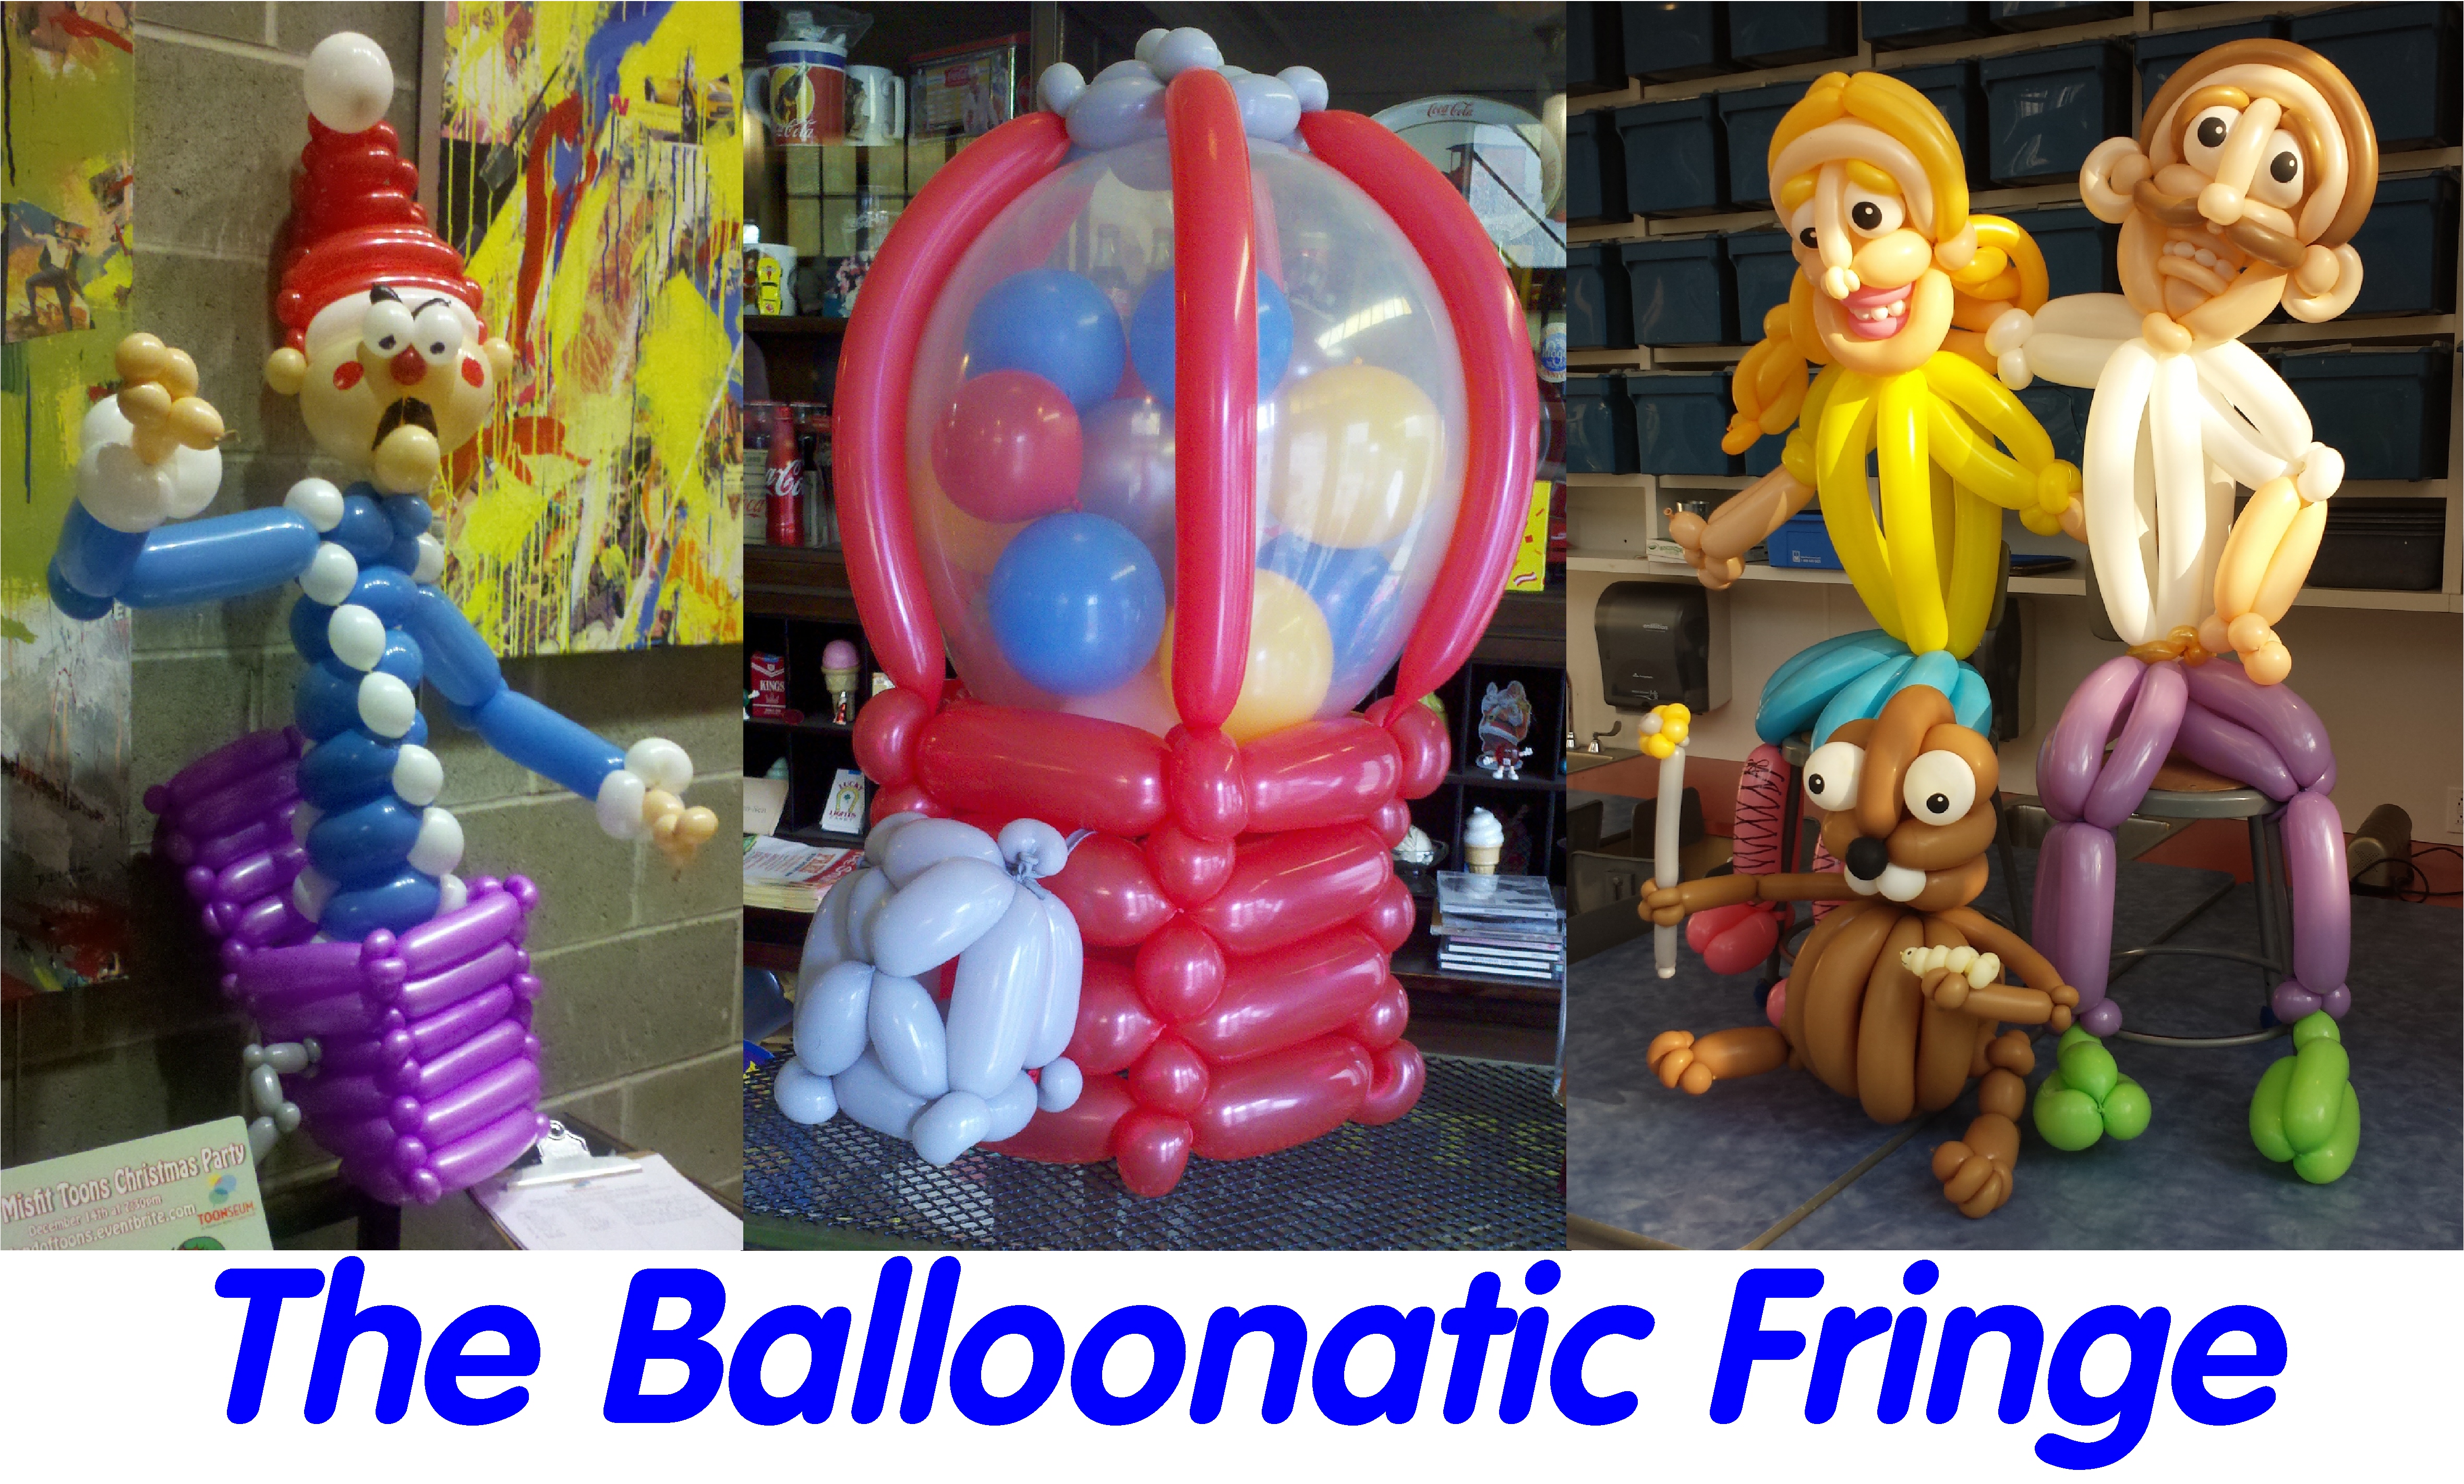 The Balloonatic Fringe